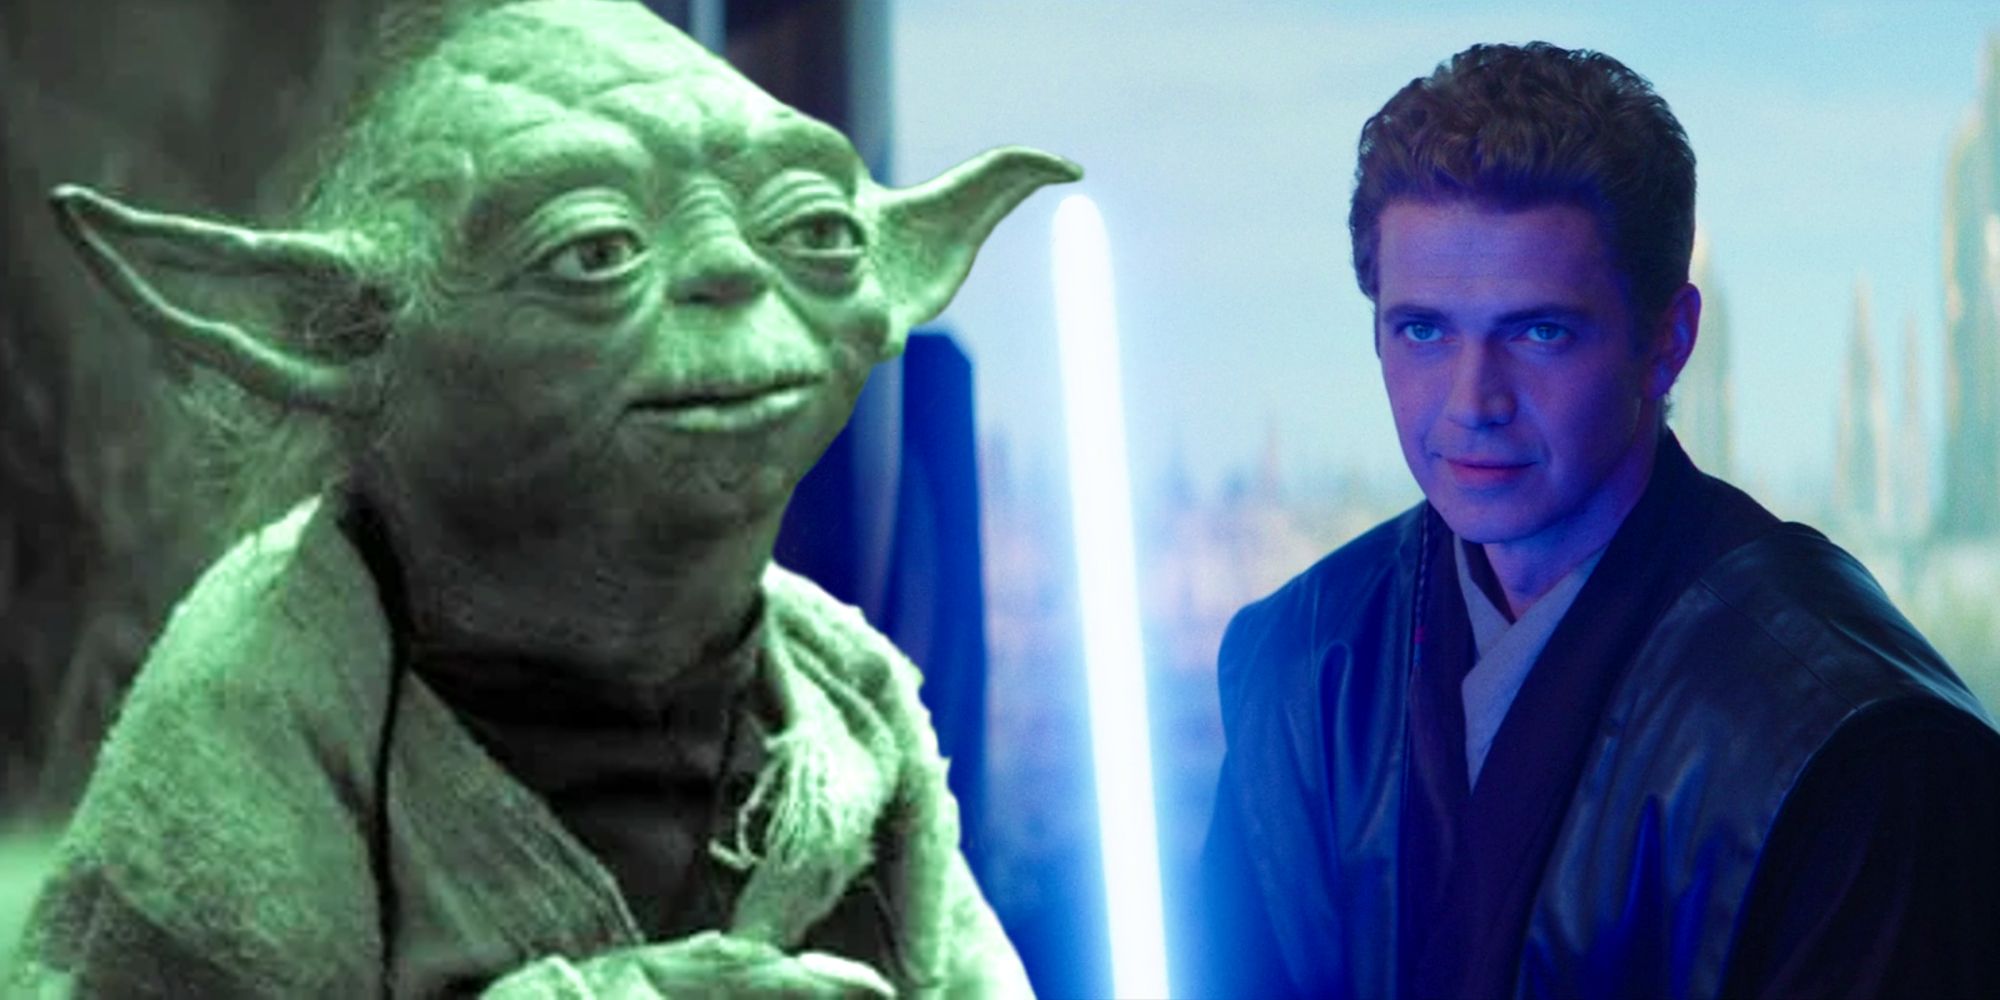 Yoda from Empire Strikes Back next to Anakin Skywalker from Obi-Wan Kenobi